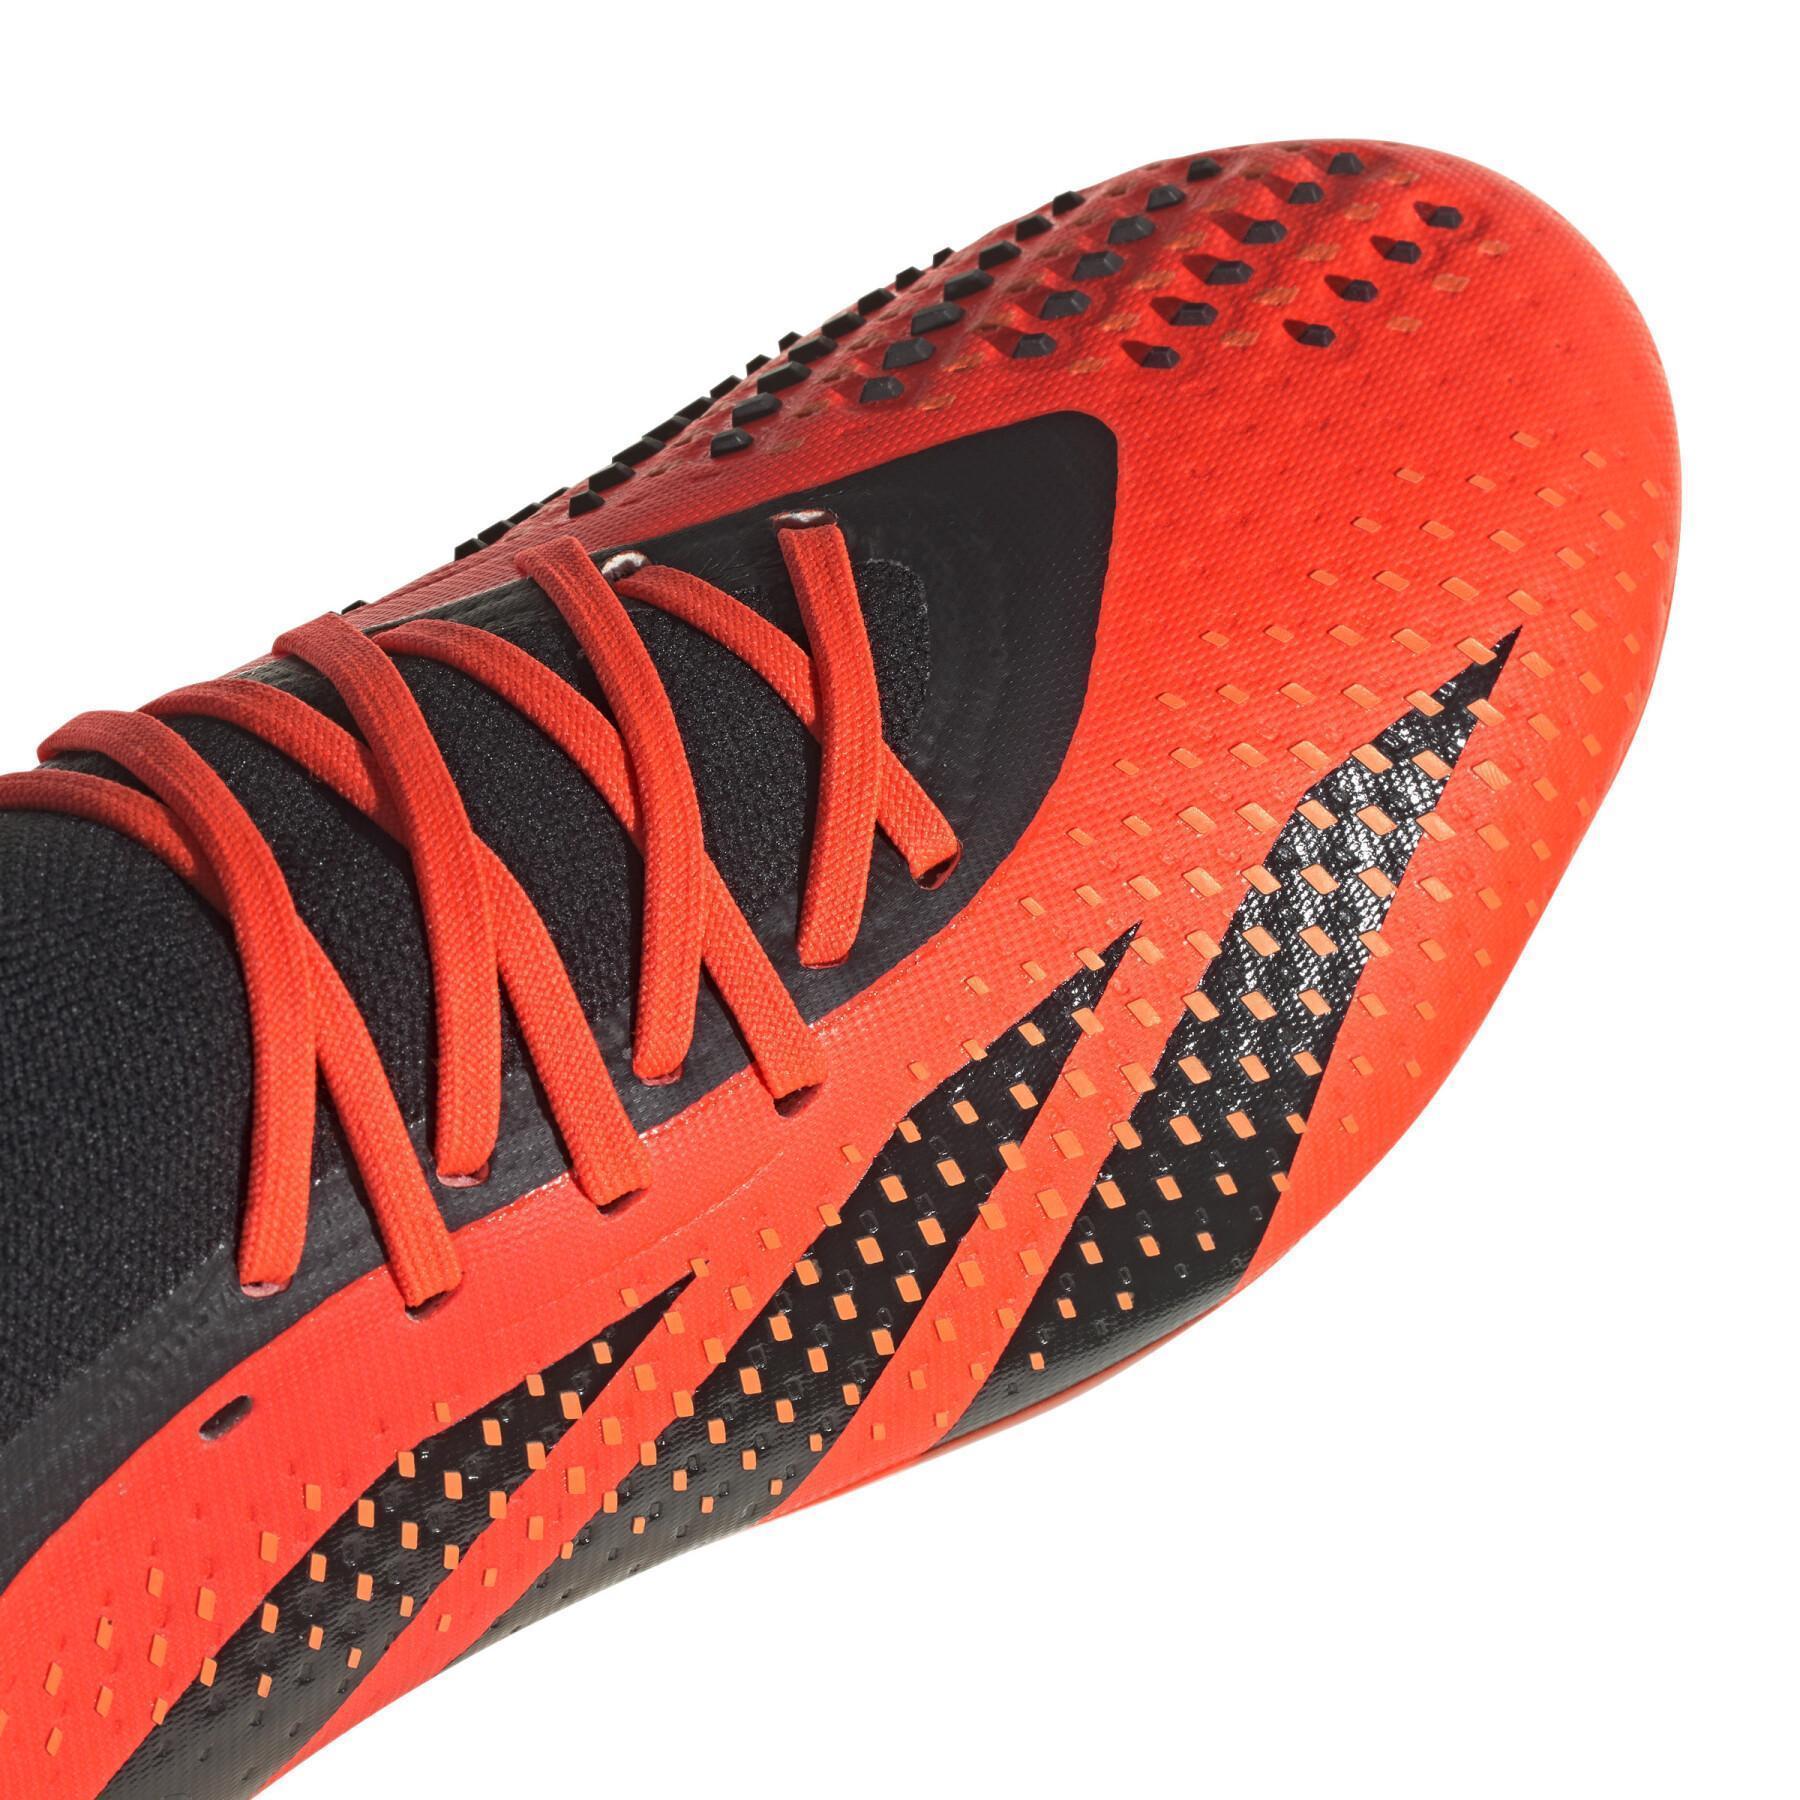 Chaussures de football adidas Predator Accuracy.2 FG Heatspawn Pack